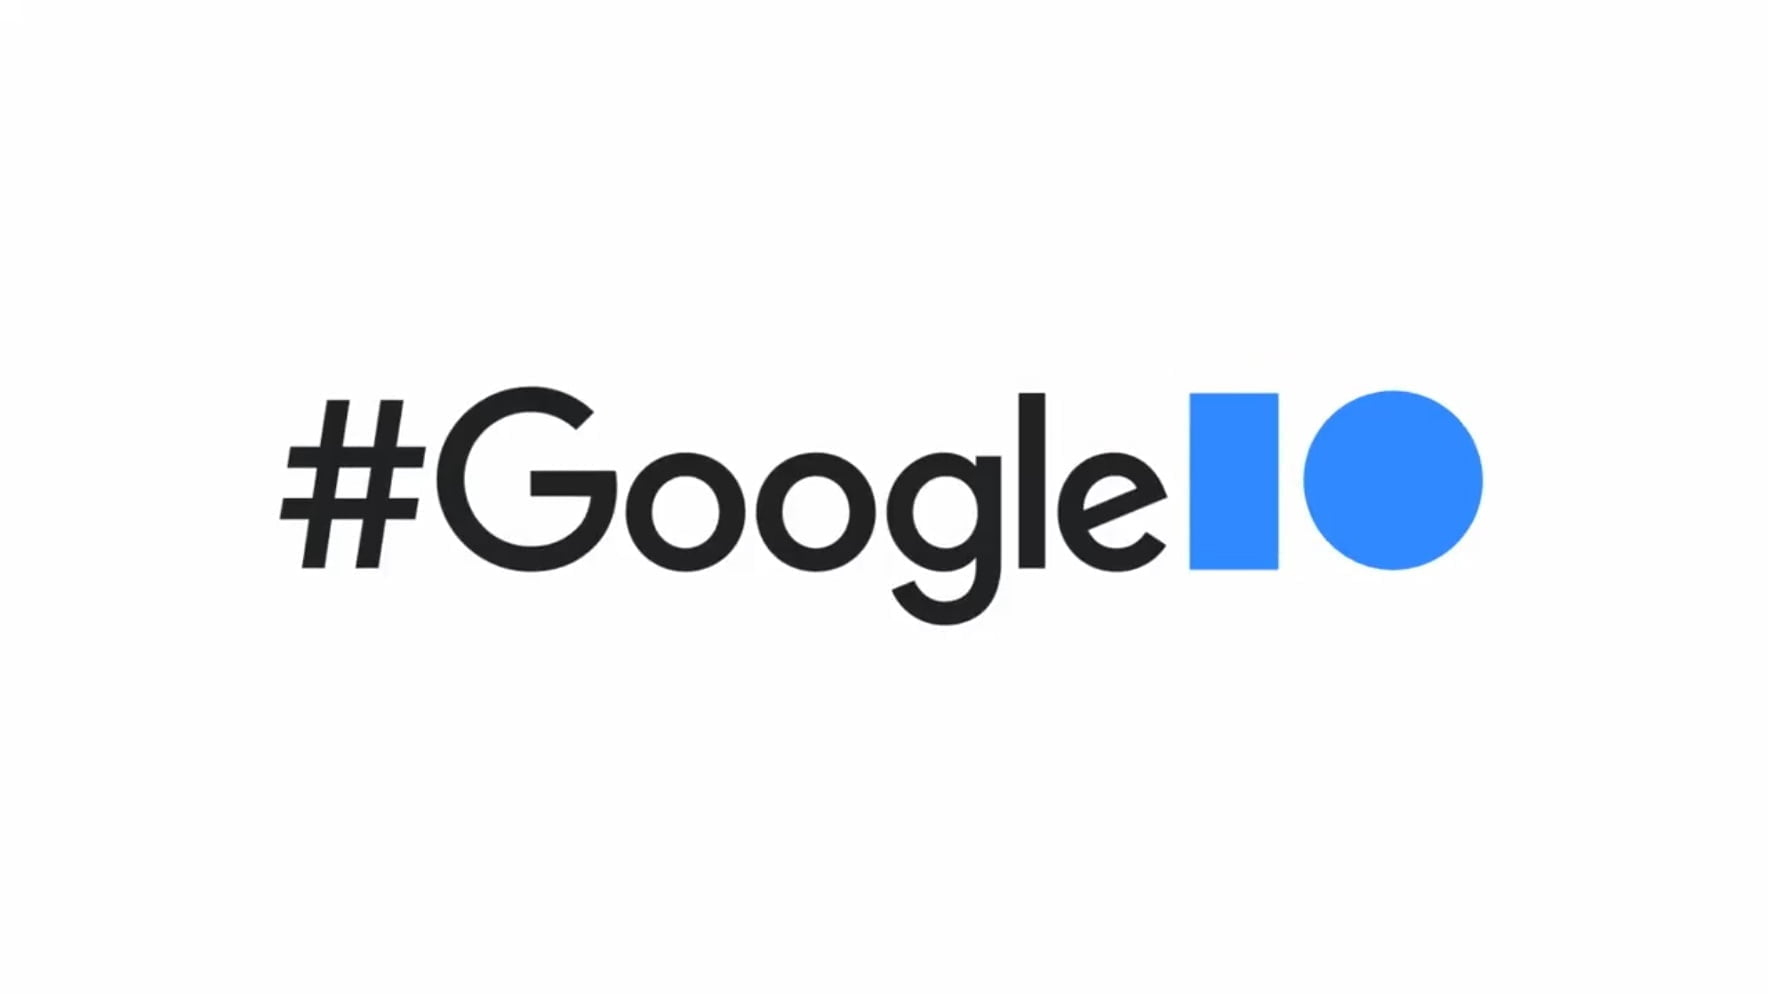 Google IO 2022